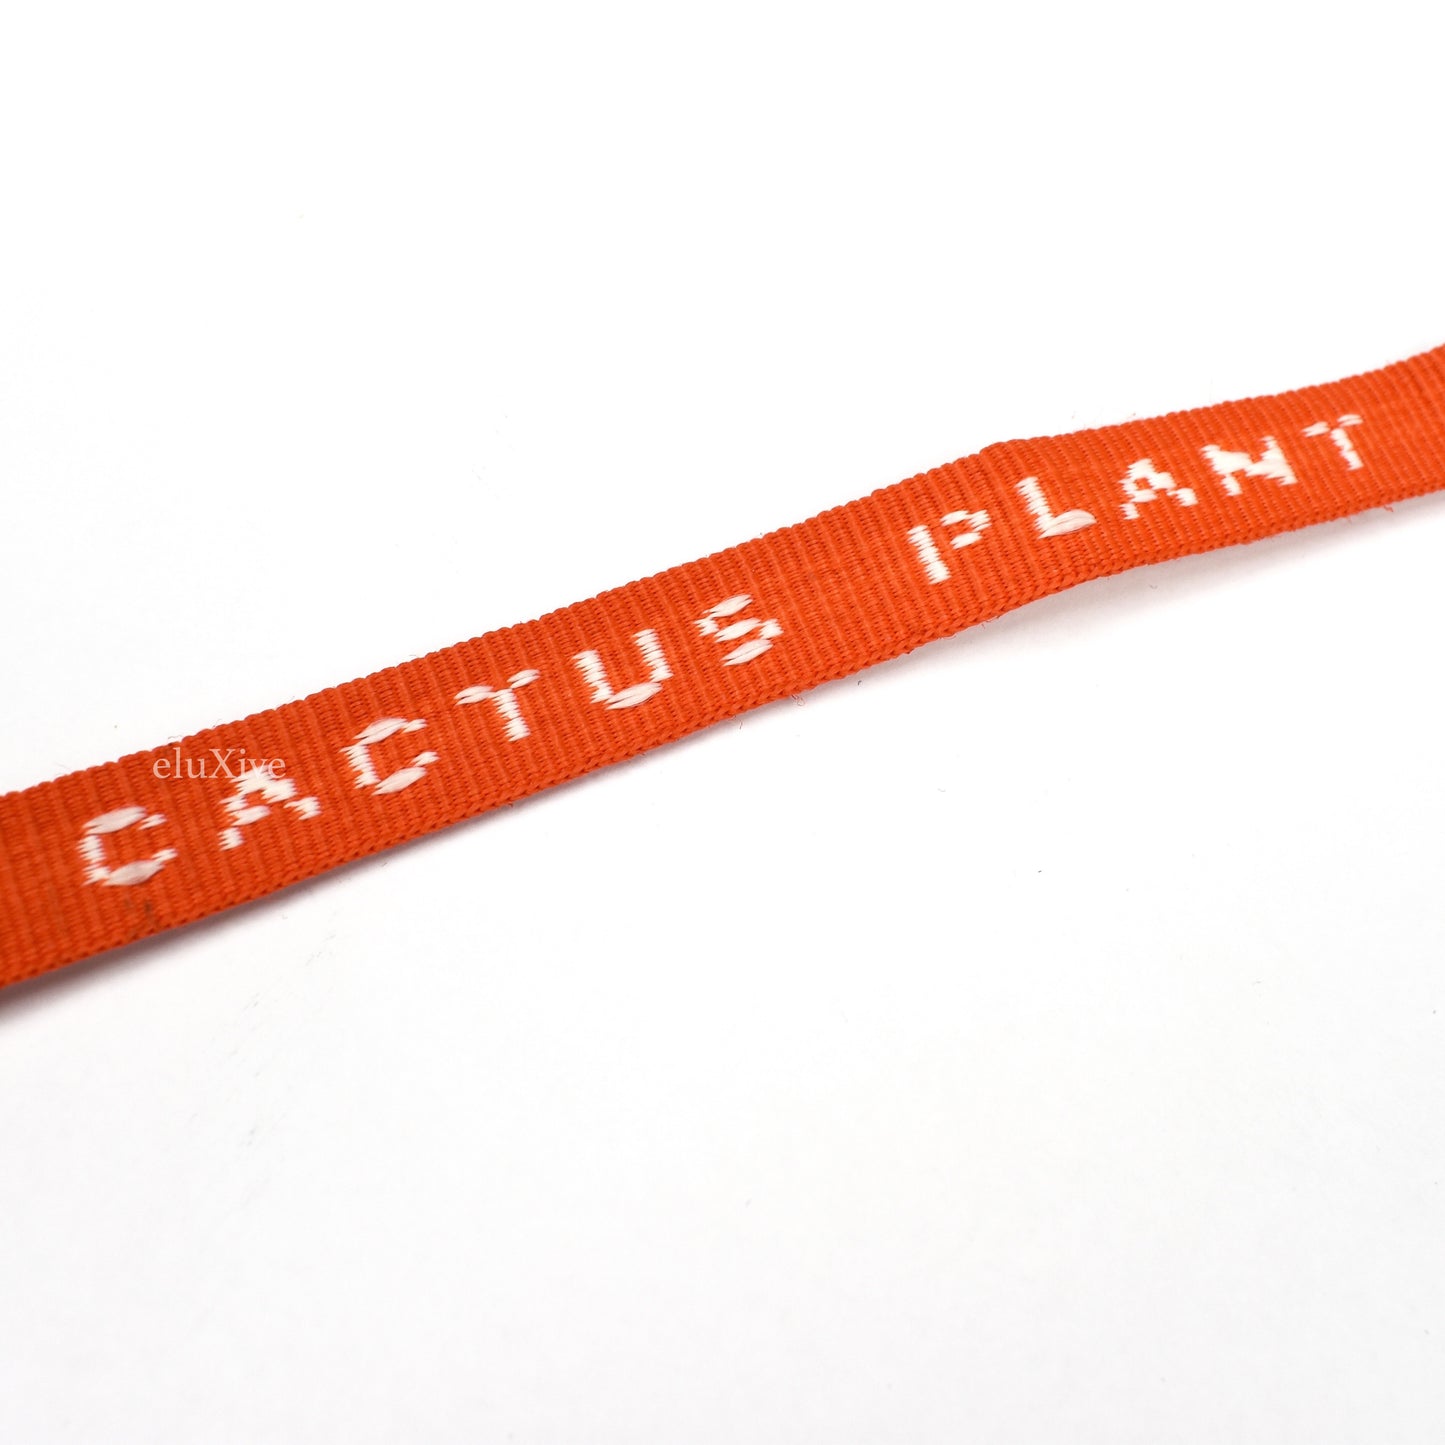 Cactus Plant Flea Market - Orange Cult ID Bracelet